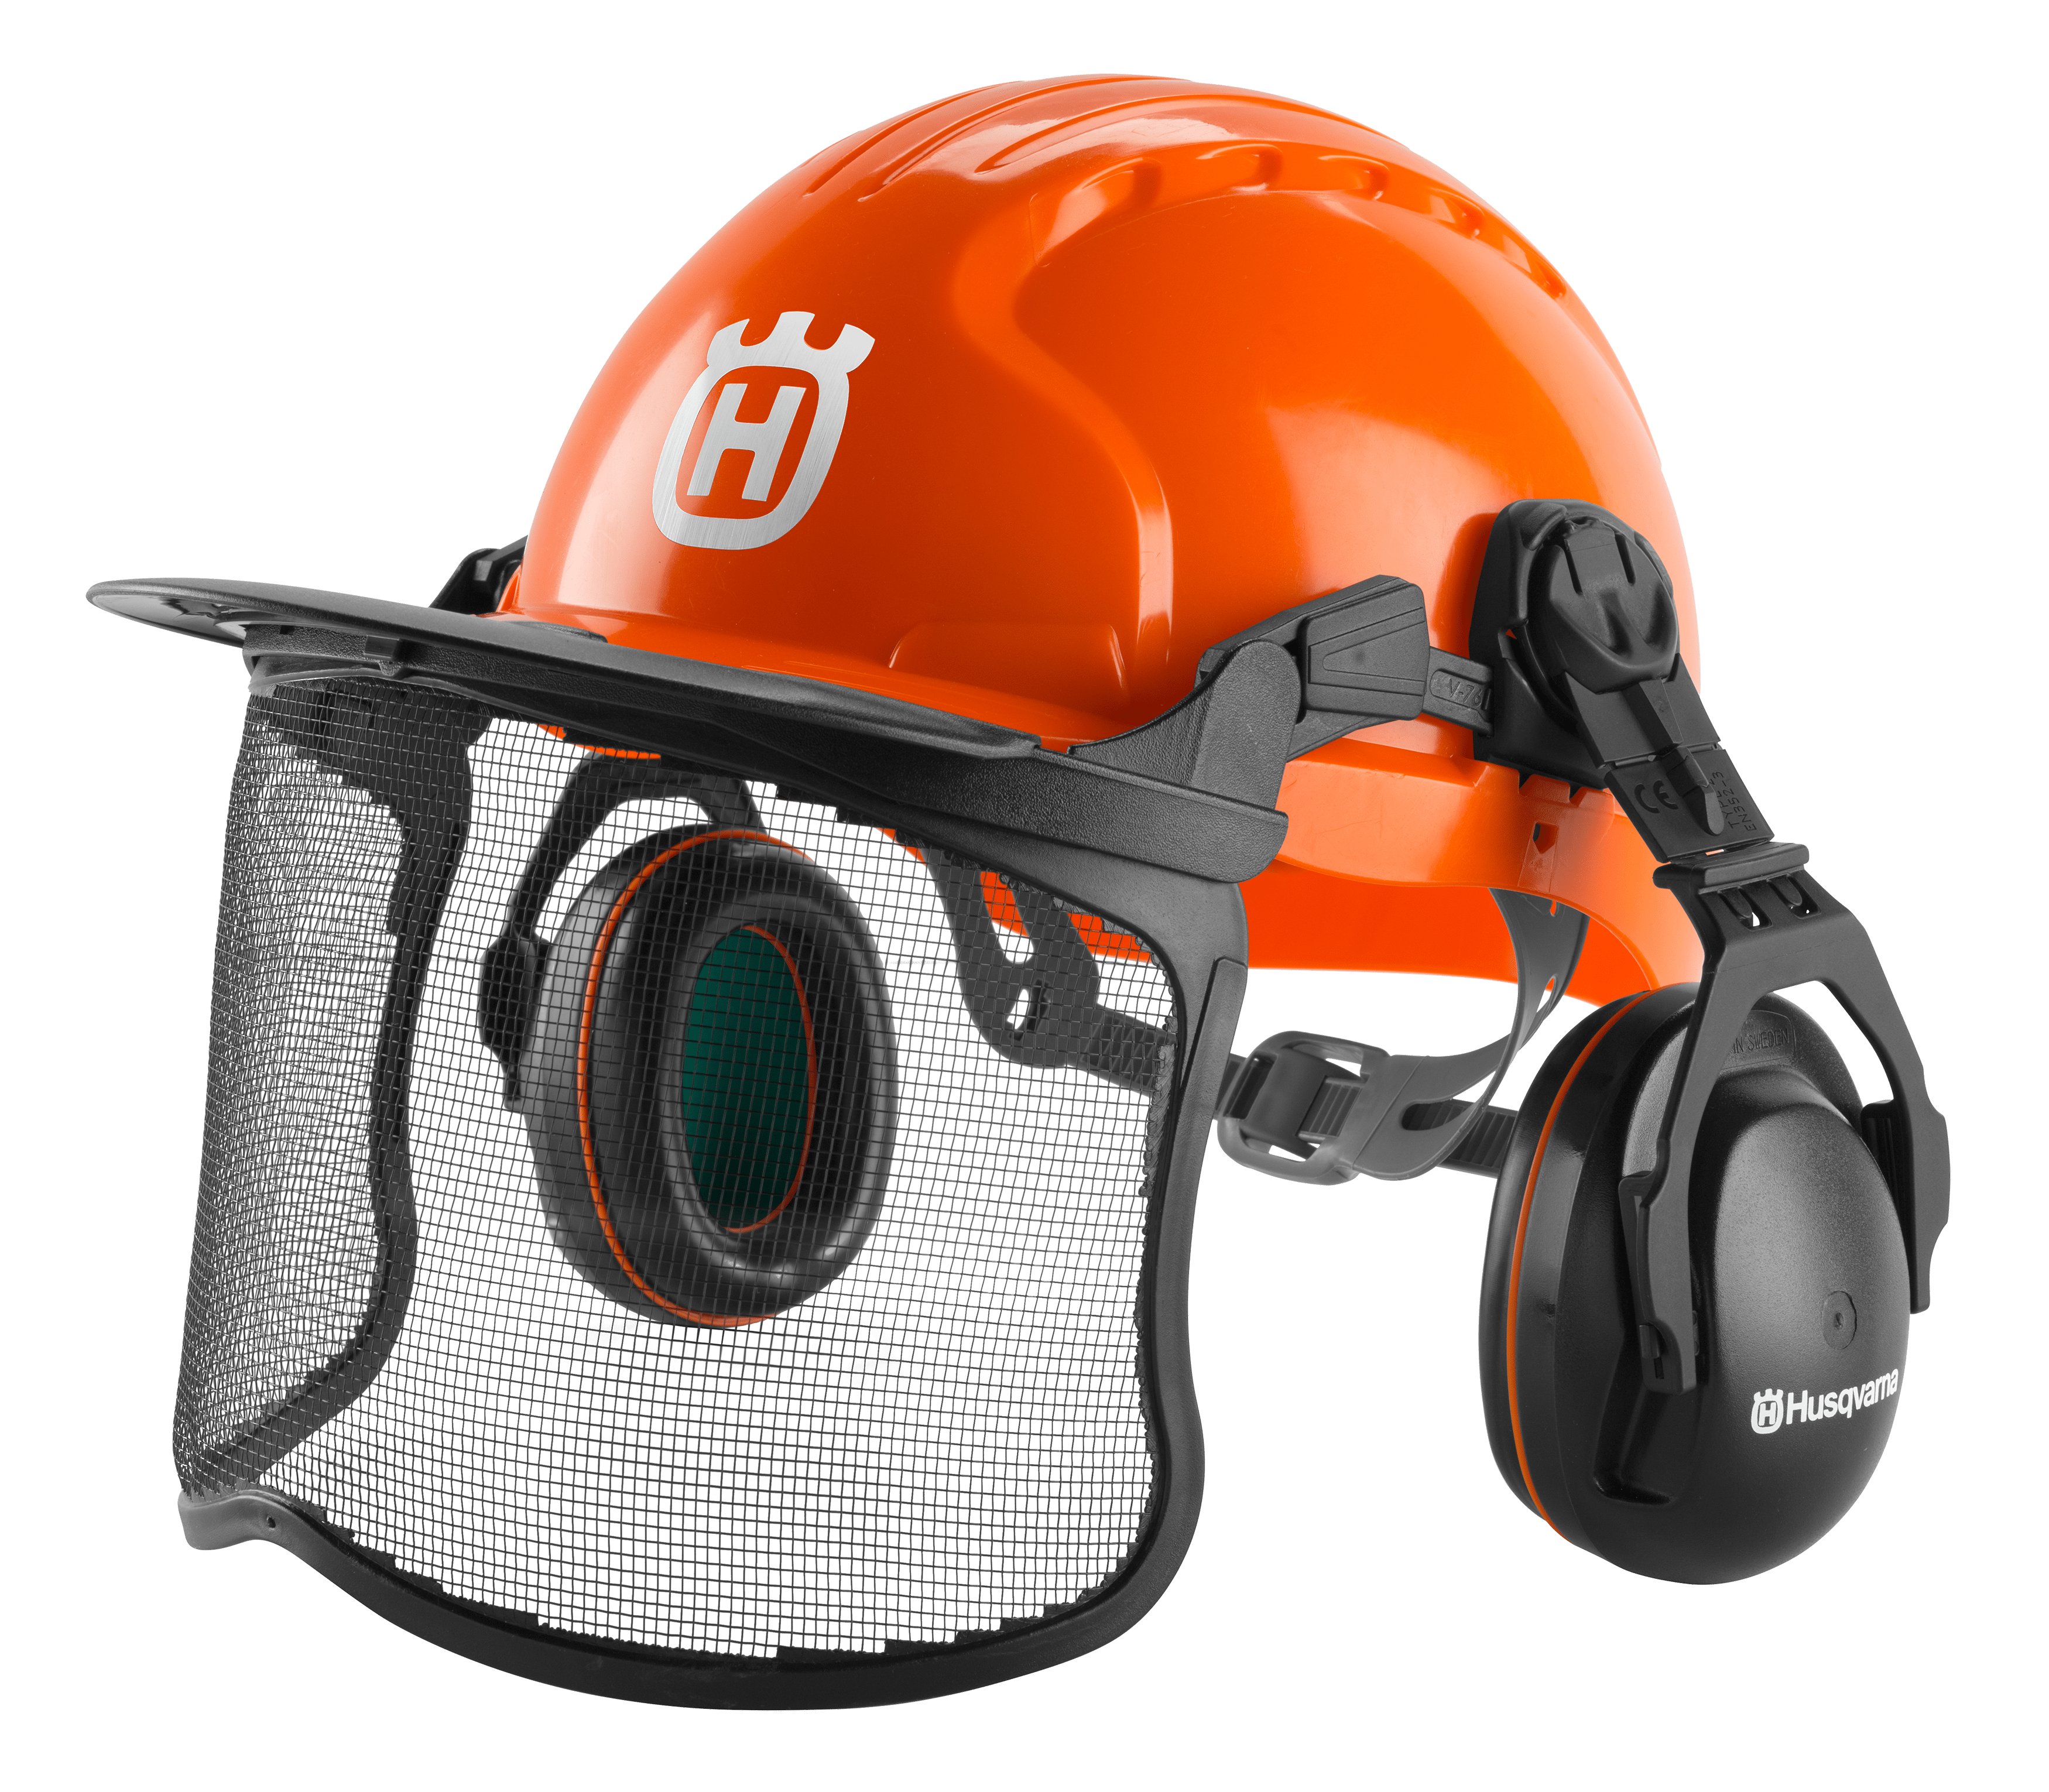 Husqvarna Chainsaw Safety Helmet Clear Perspex Visor